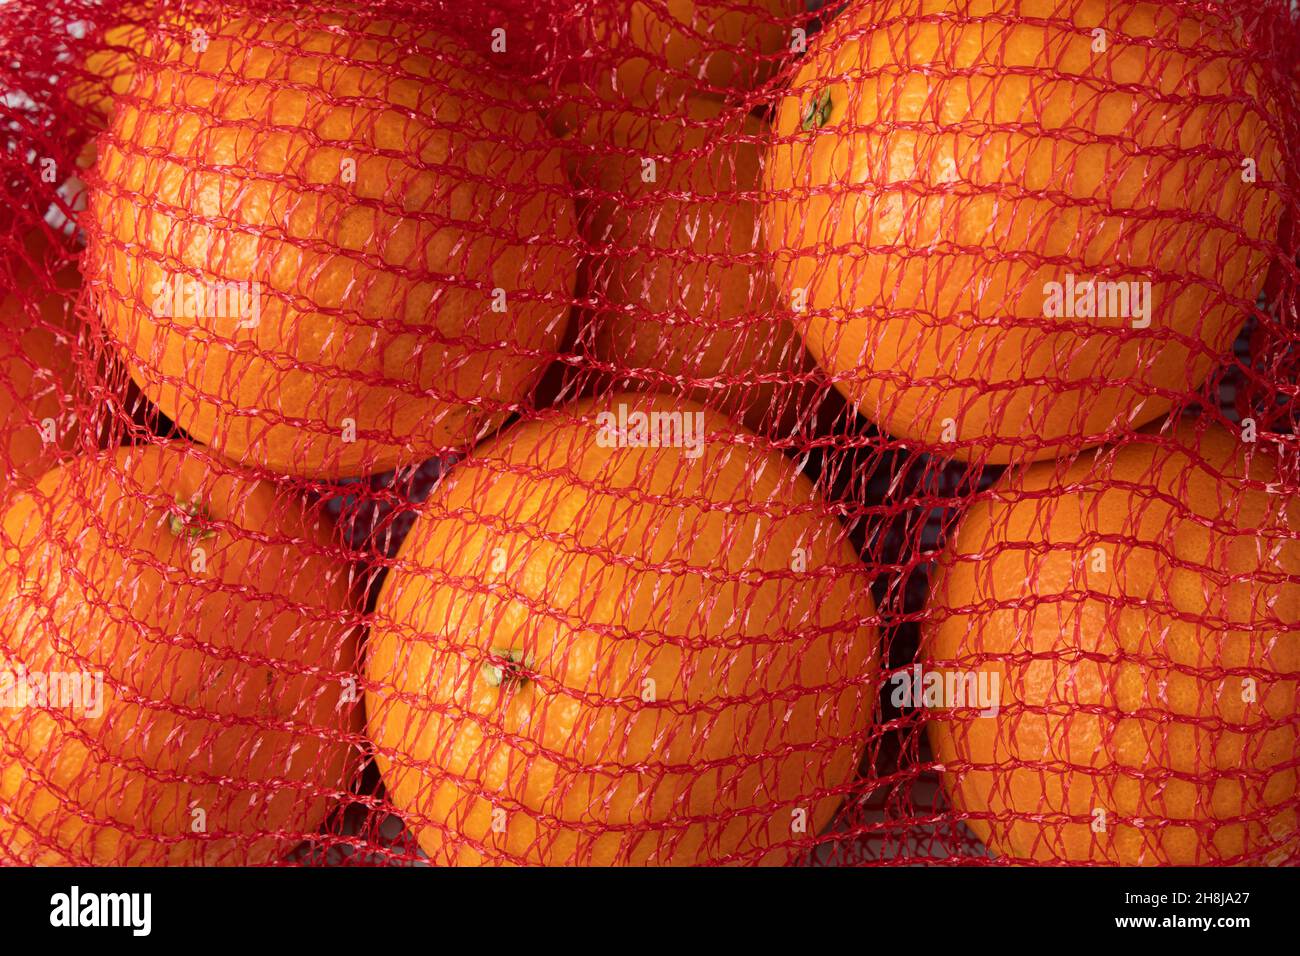 https://c8.alamy.com/comp/2H8JA27/fresh-oranges-in-plastic-mesh-from-supermarket-2H8JA27.jpg